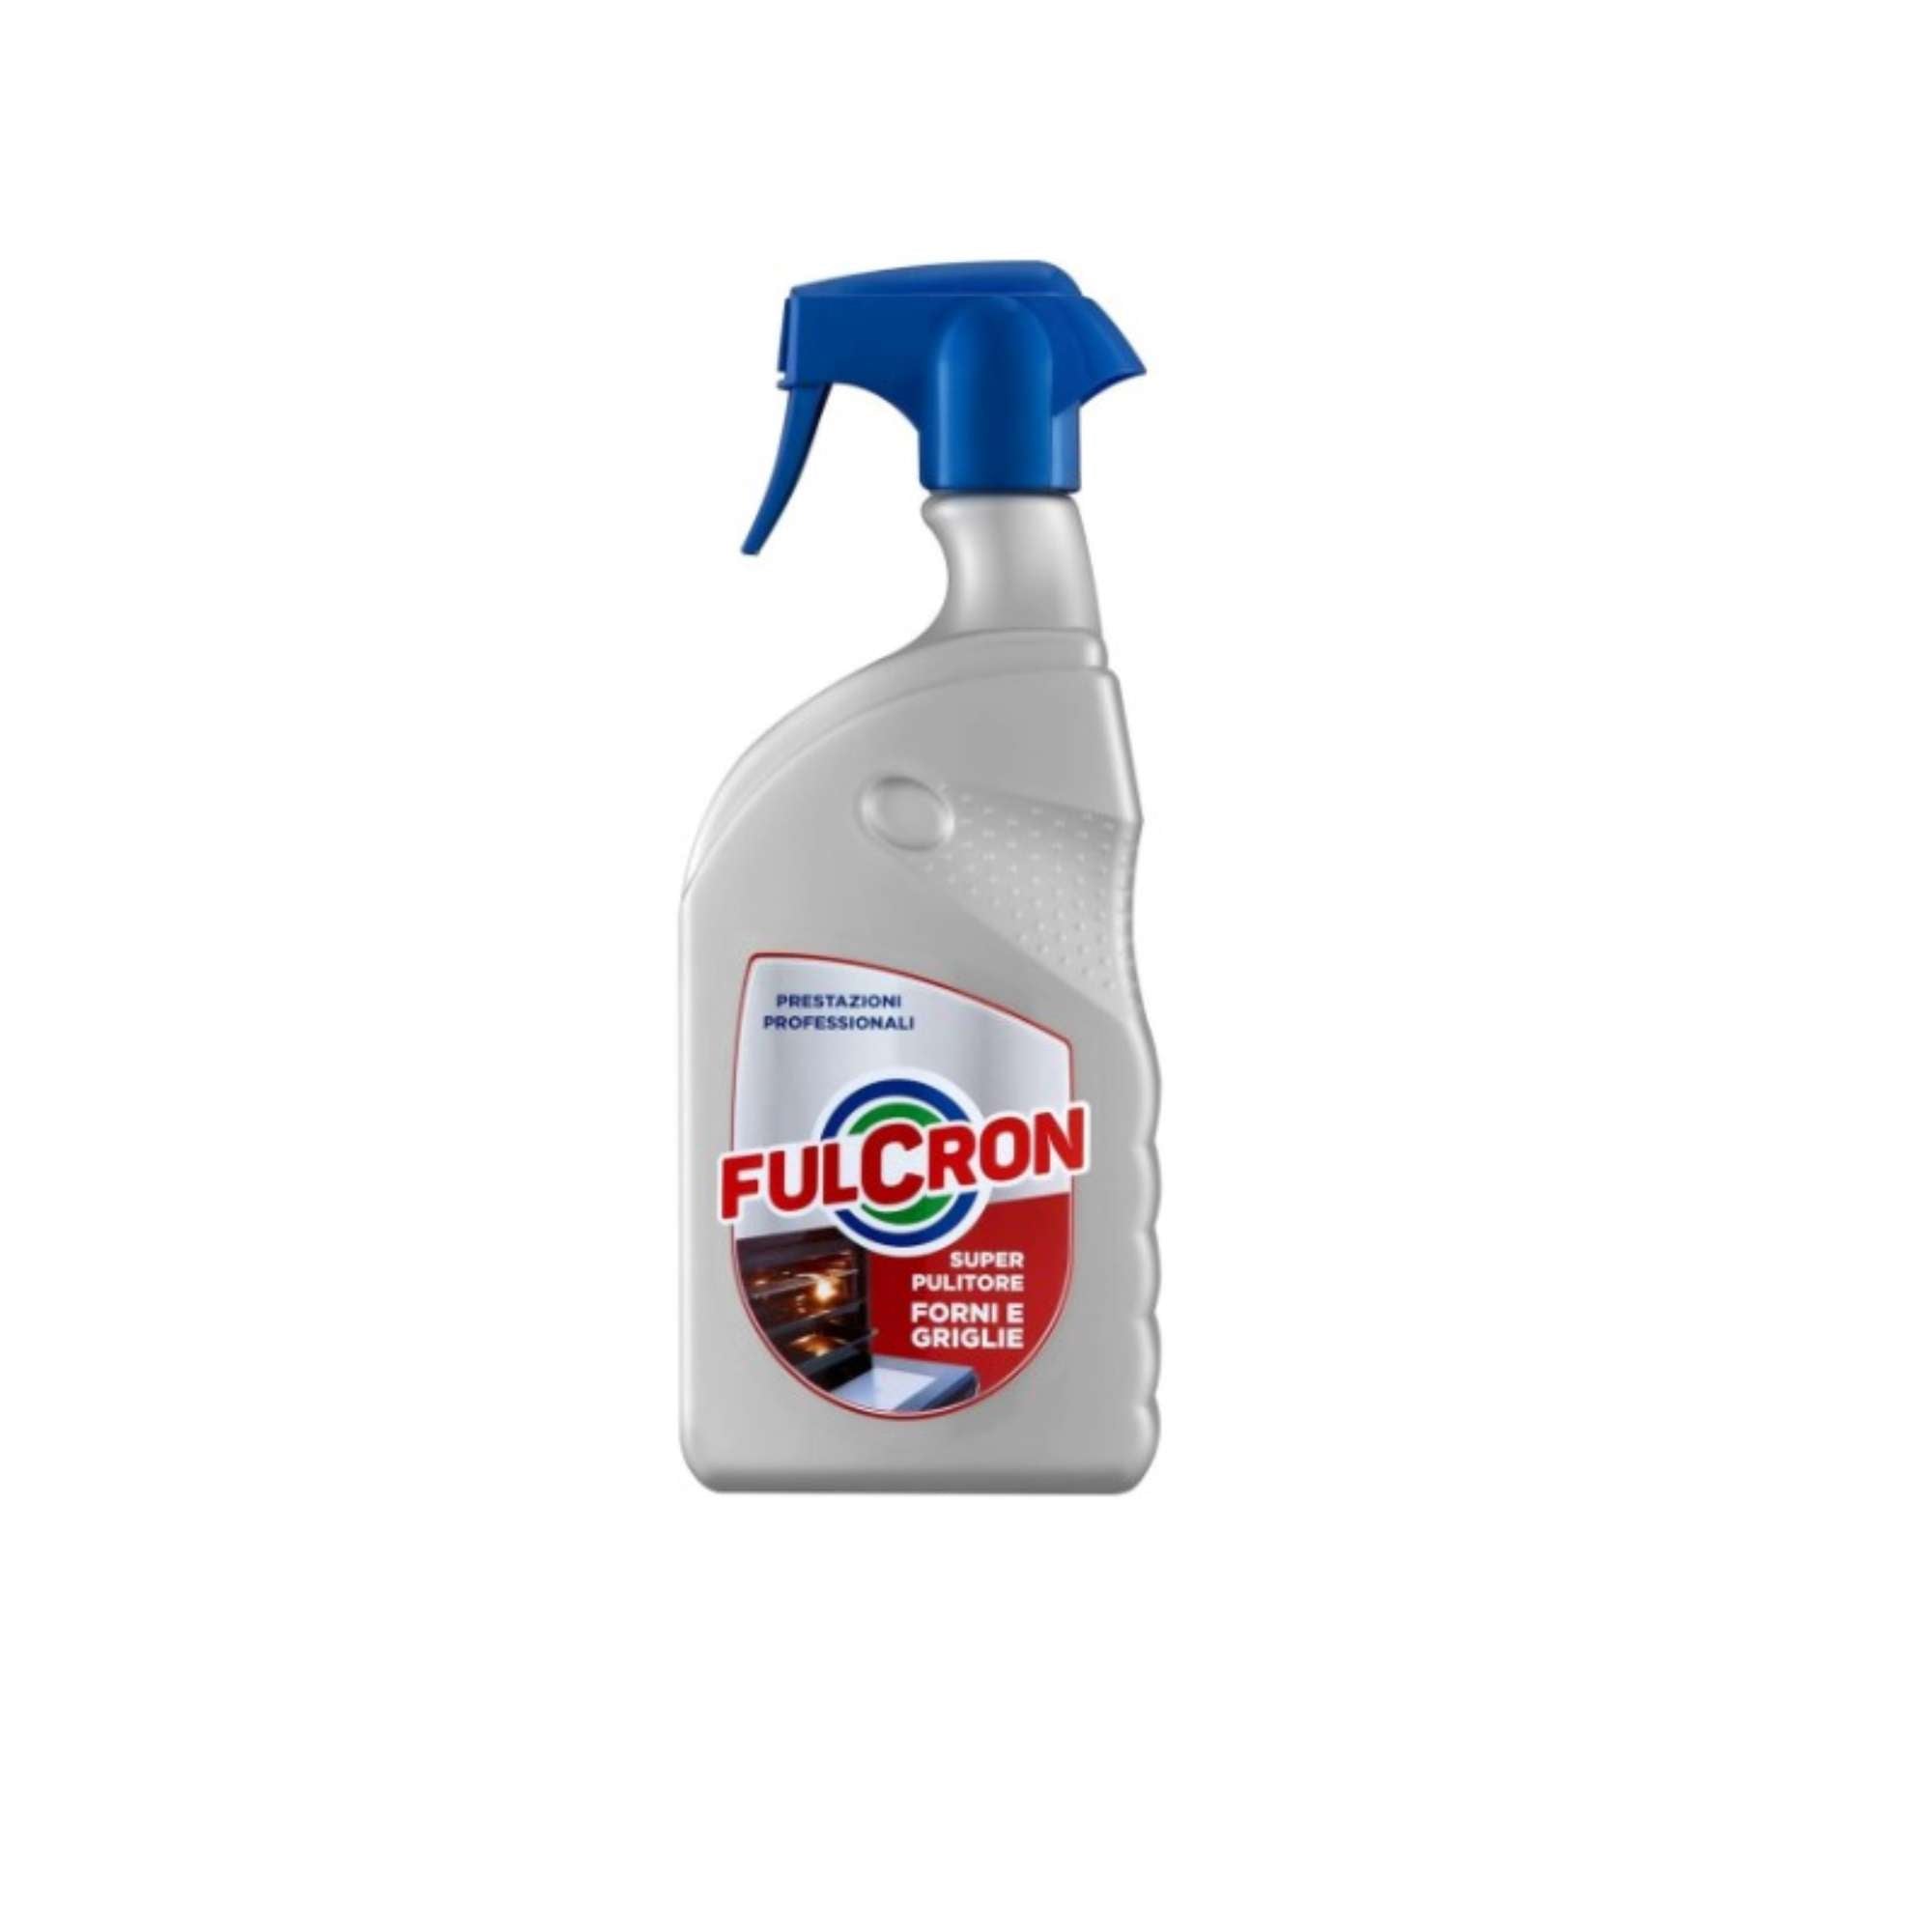 Fulcron Spray pulitore forni e griglie 750 ml - Arexons 2561